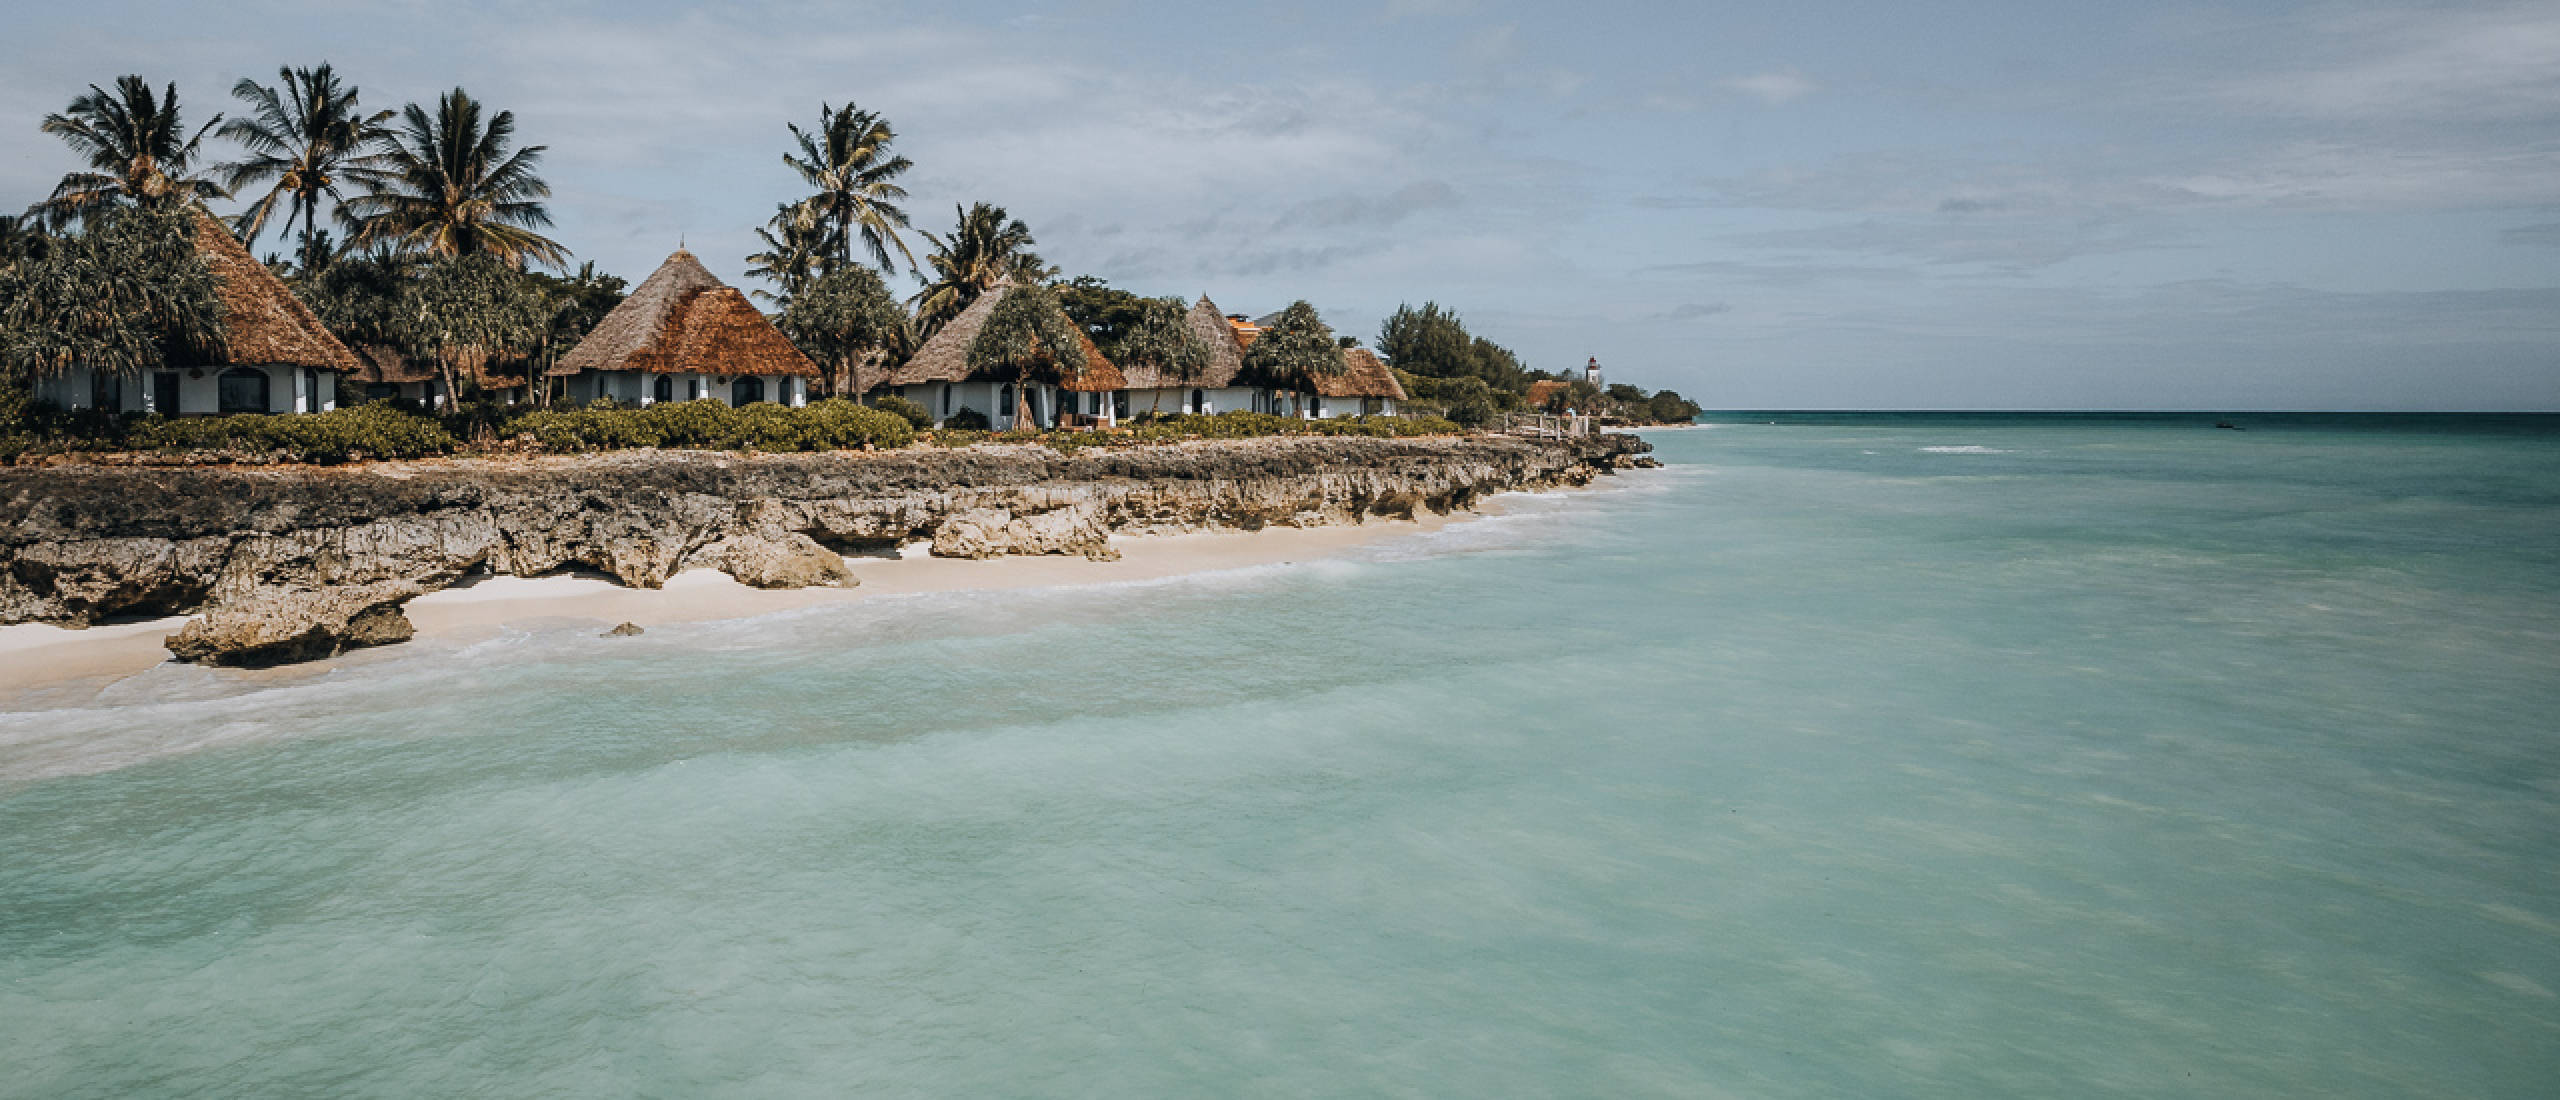 11 things to do in Nungwi while staying at Essque Zalu Beach Resort in Zanzibar